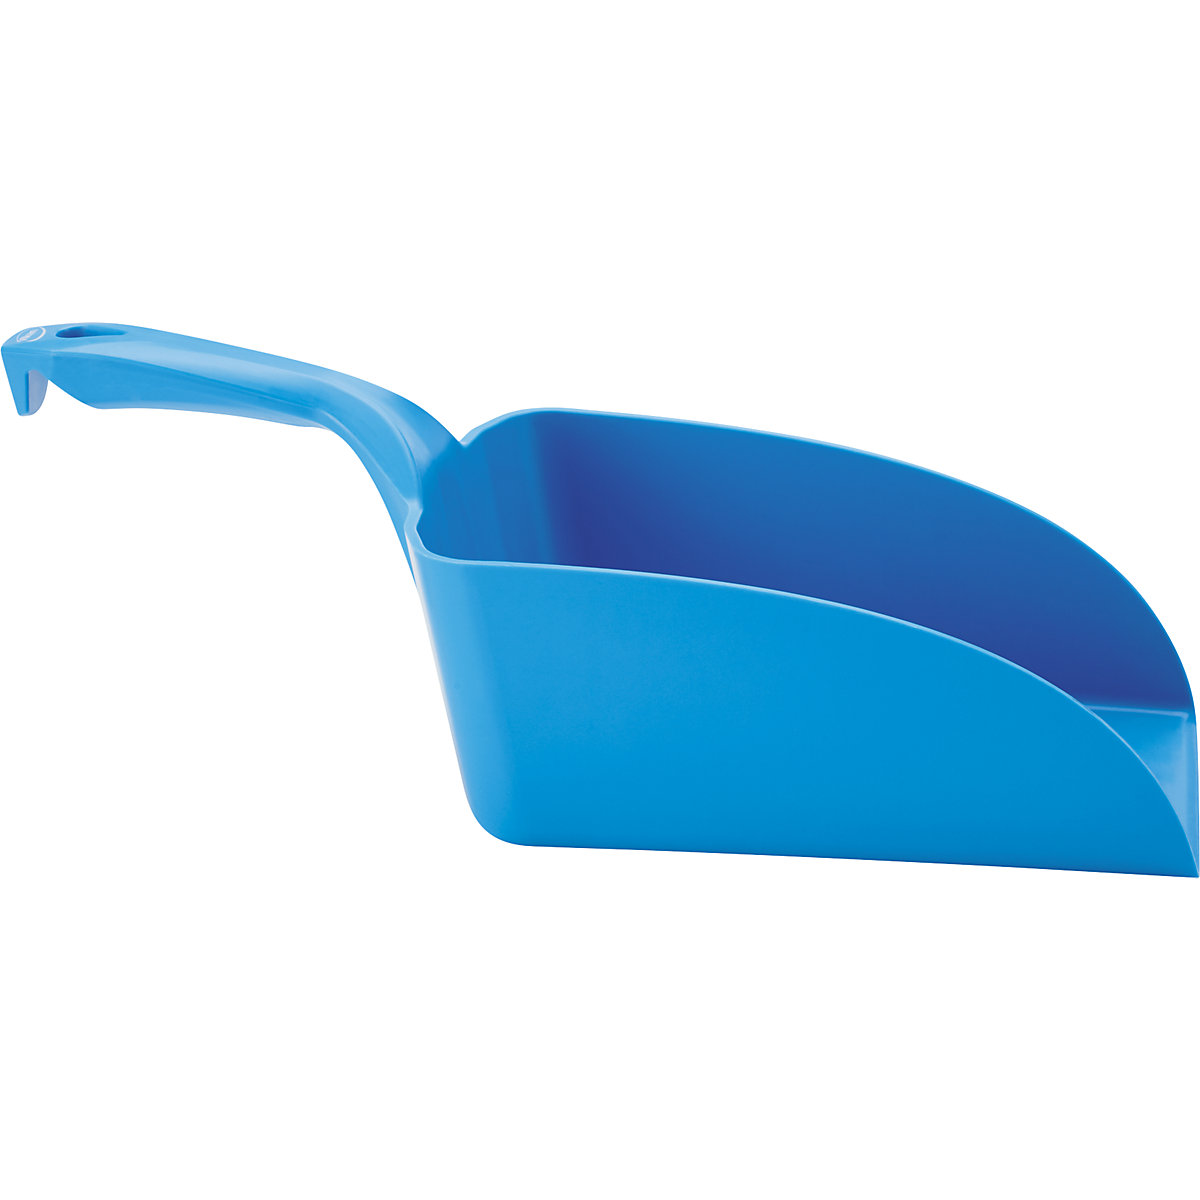 Hand shovel, suitable for foodstuffs – Vikan (Product illustration 4)-3